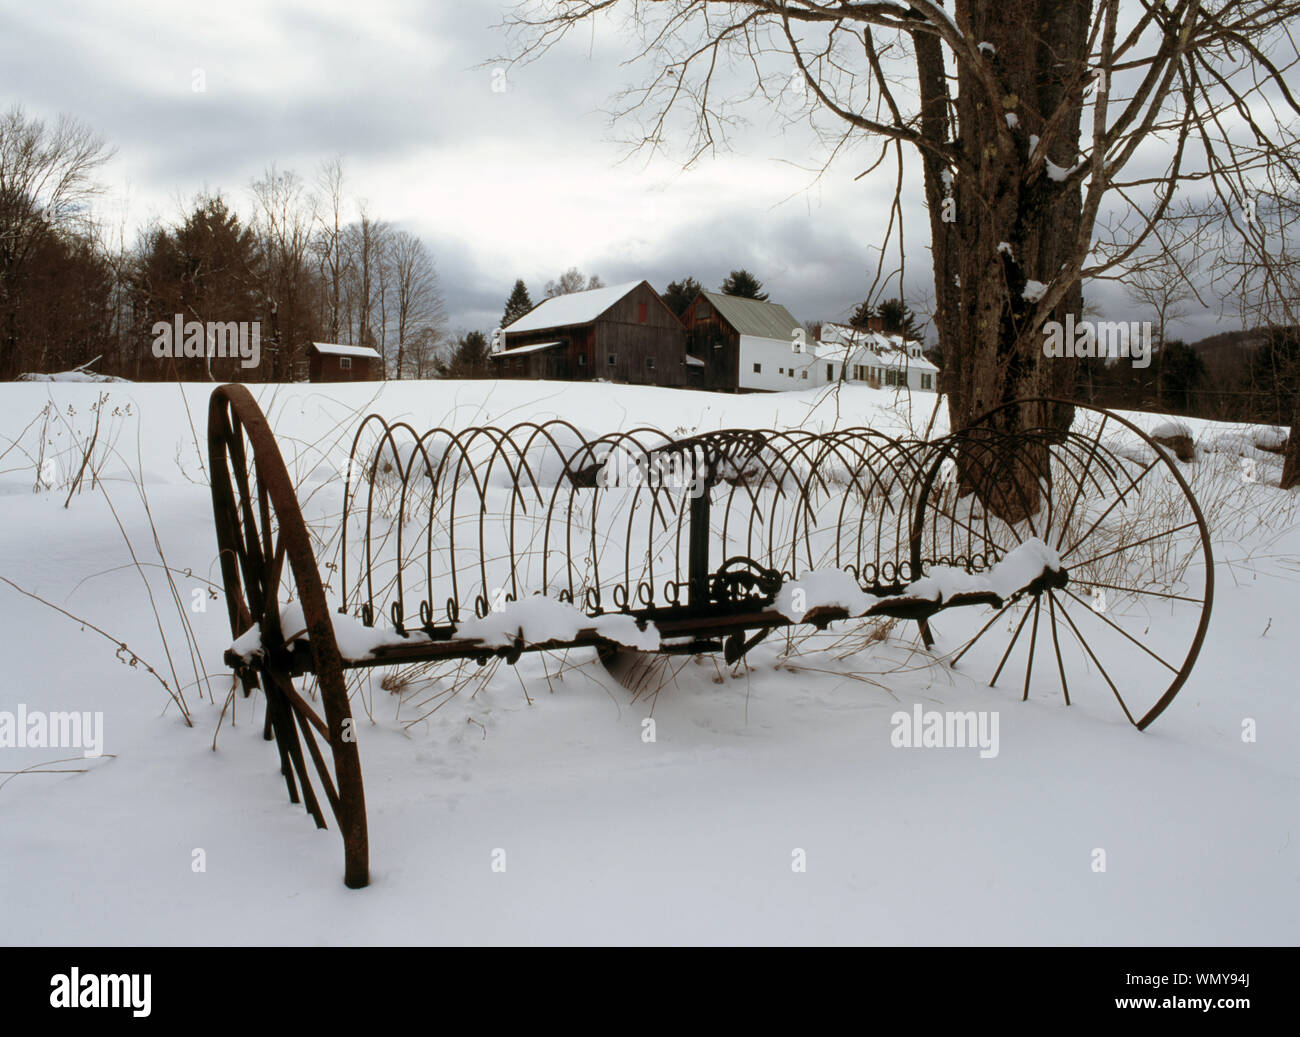 Vermont farm in winter snow Stock Photo